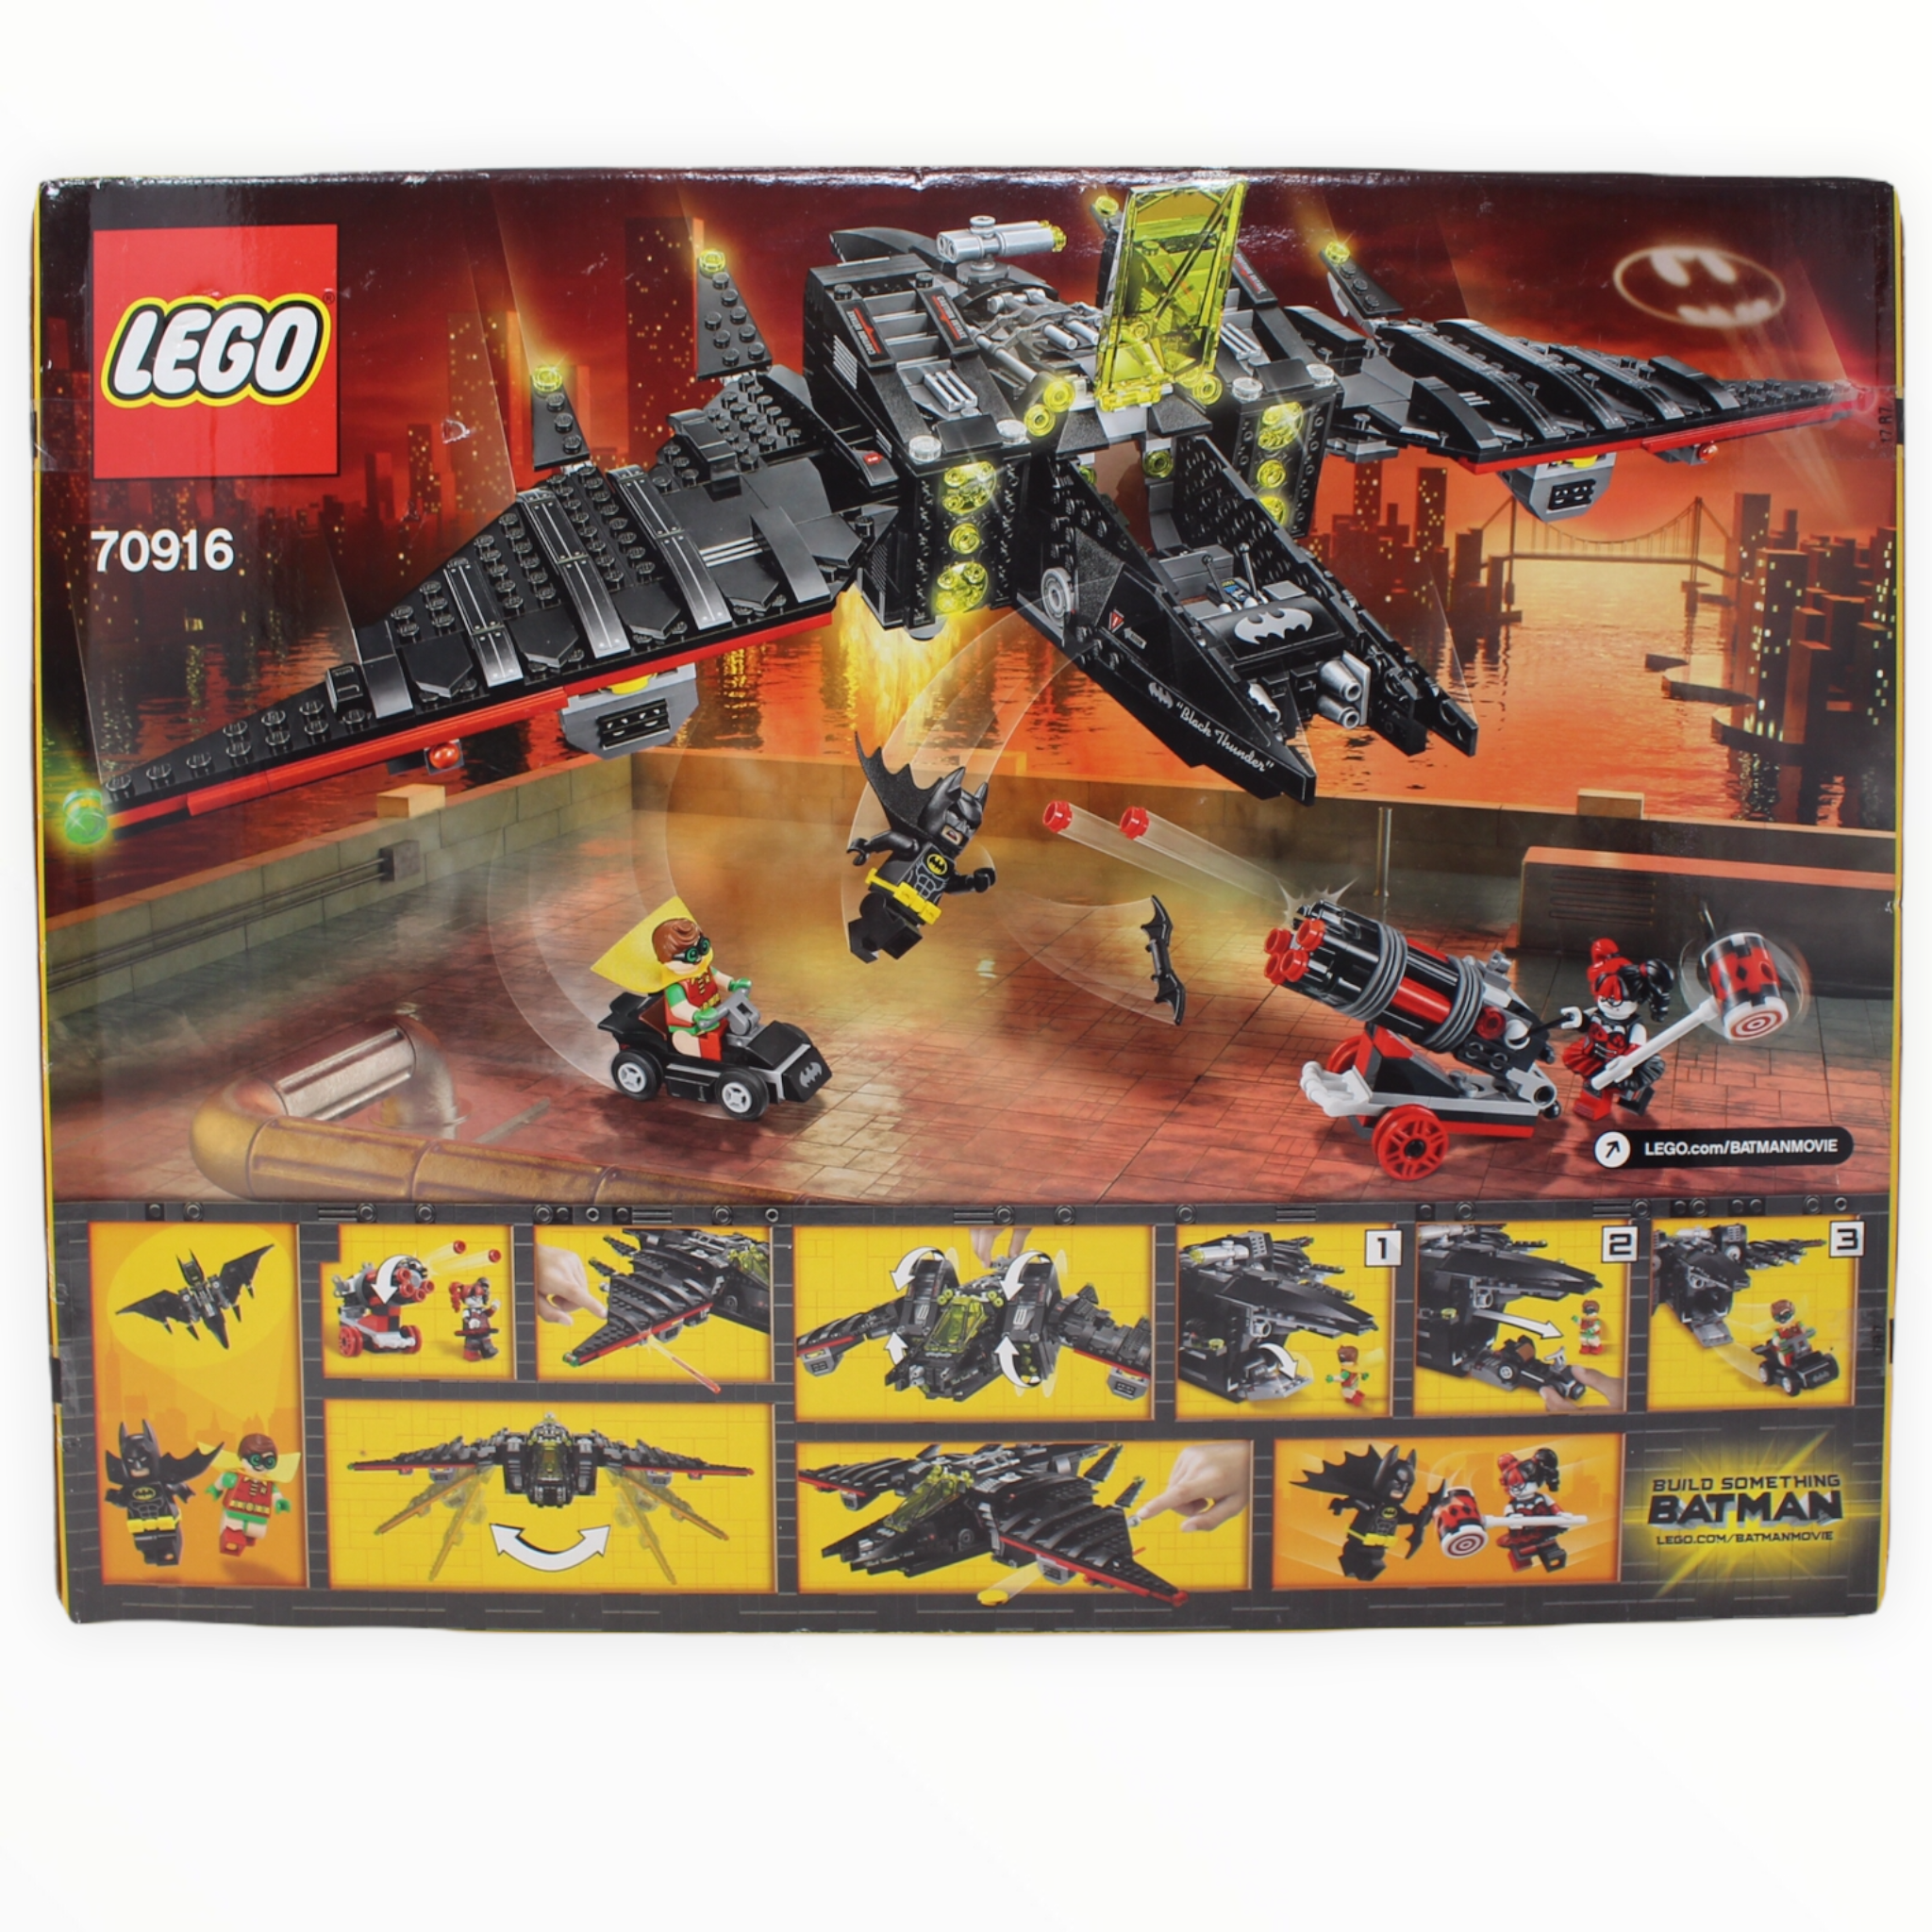 Retired Set 70916 The LEGO Batman Movie The Batwing